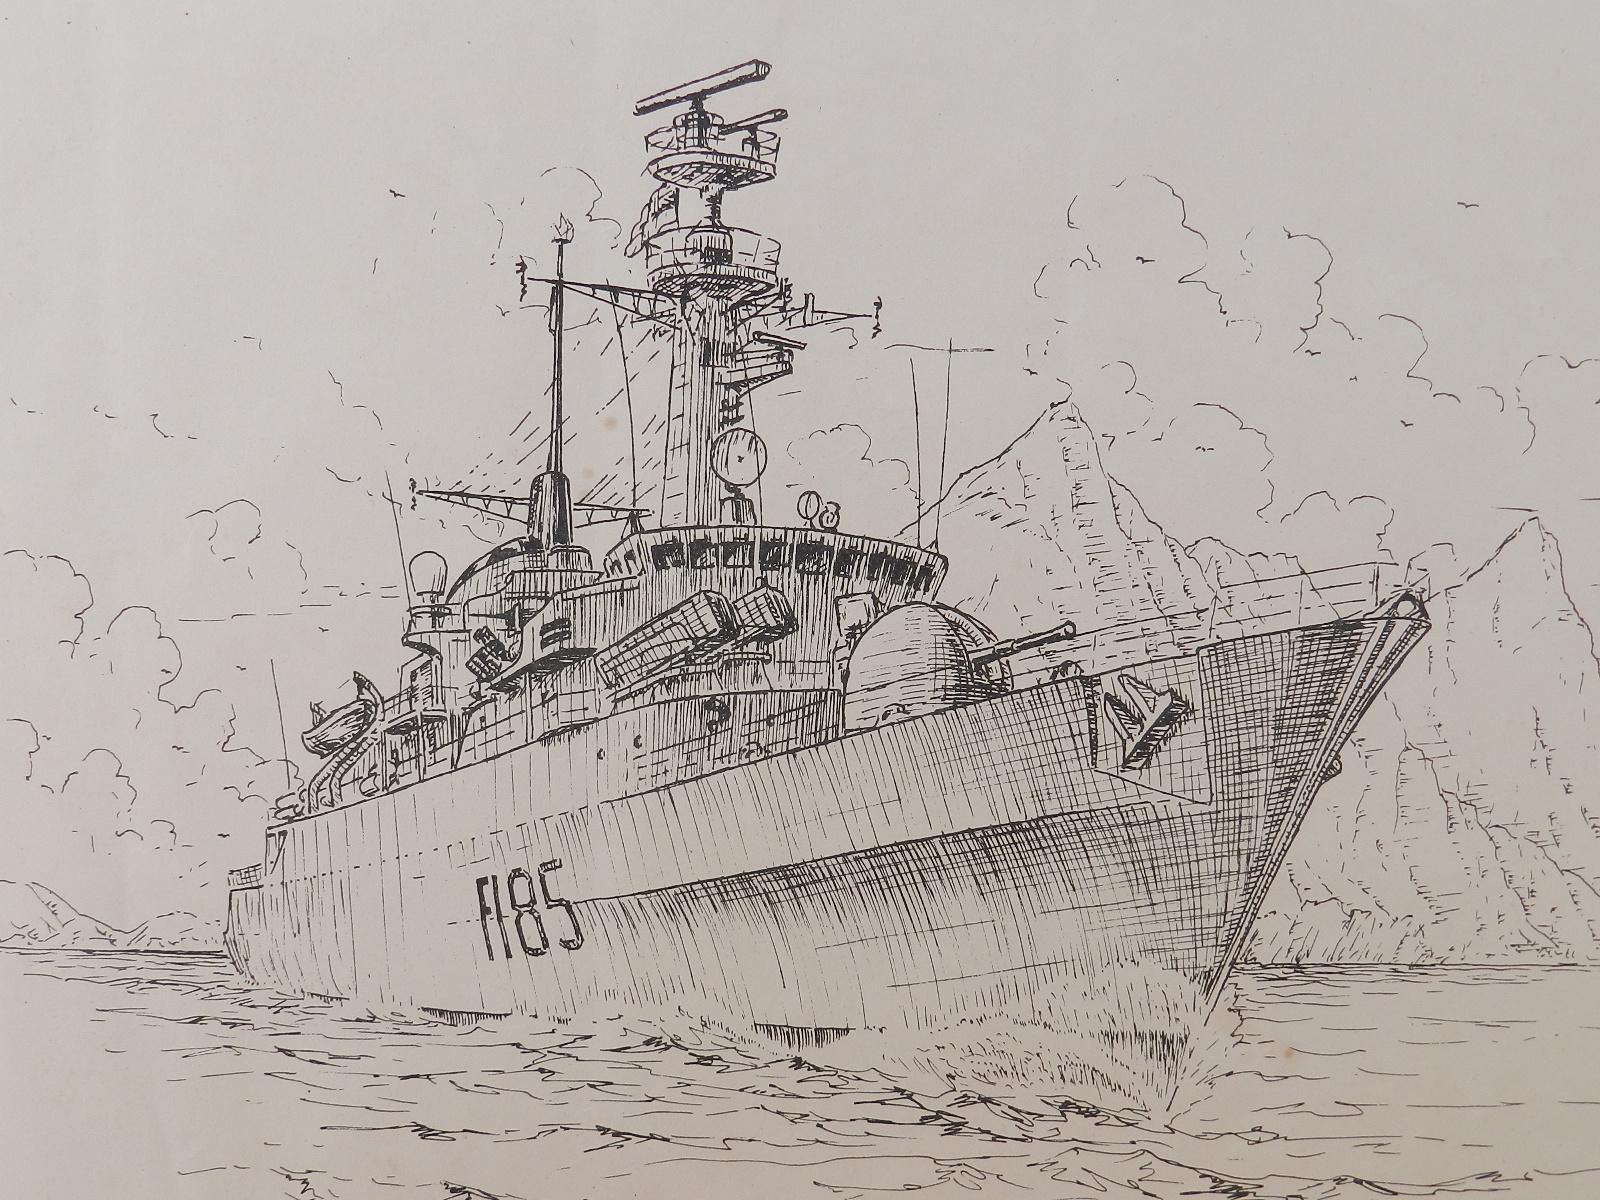 Peinture à l'encre de navire de guerre de David Hawker '80 - Autres styles artistiques Art par David Hacker